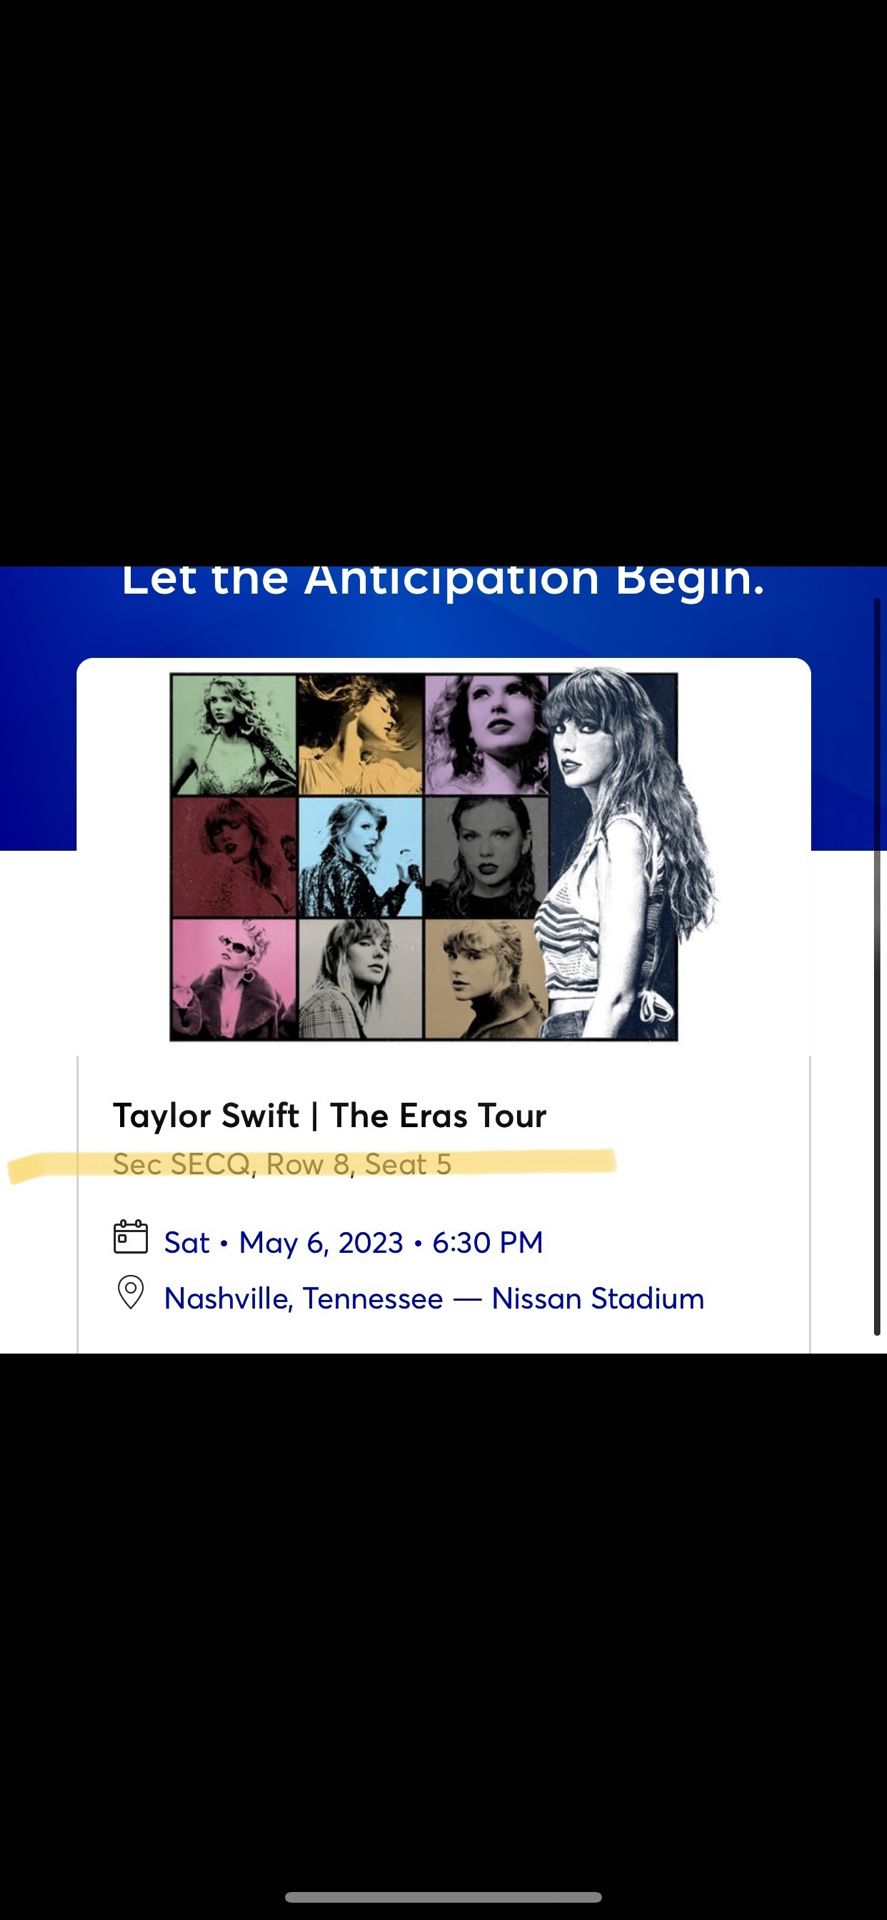 The Eras Tour Taylor Swift Ticket